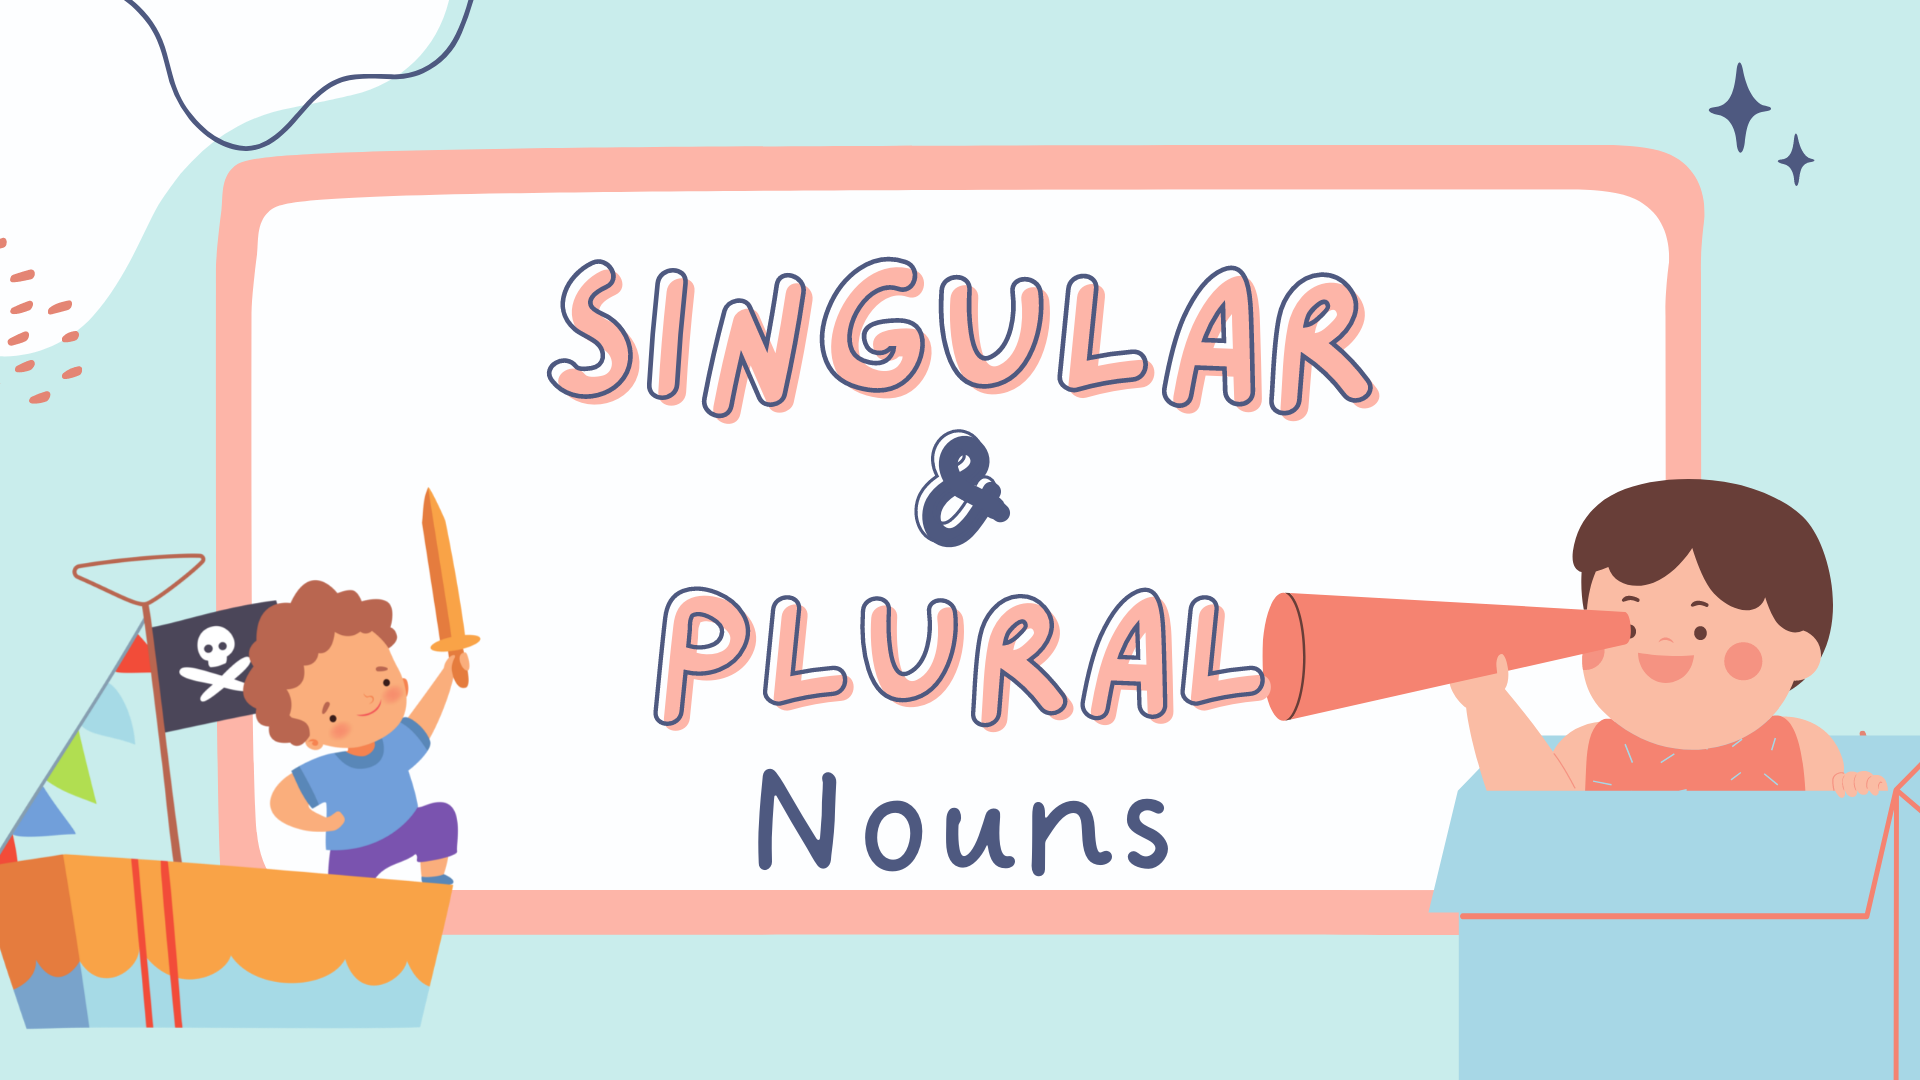 Plural Nouns - Year 10 - Quizizz